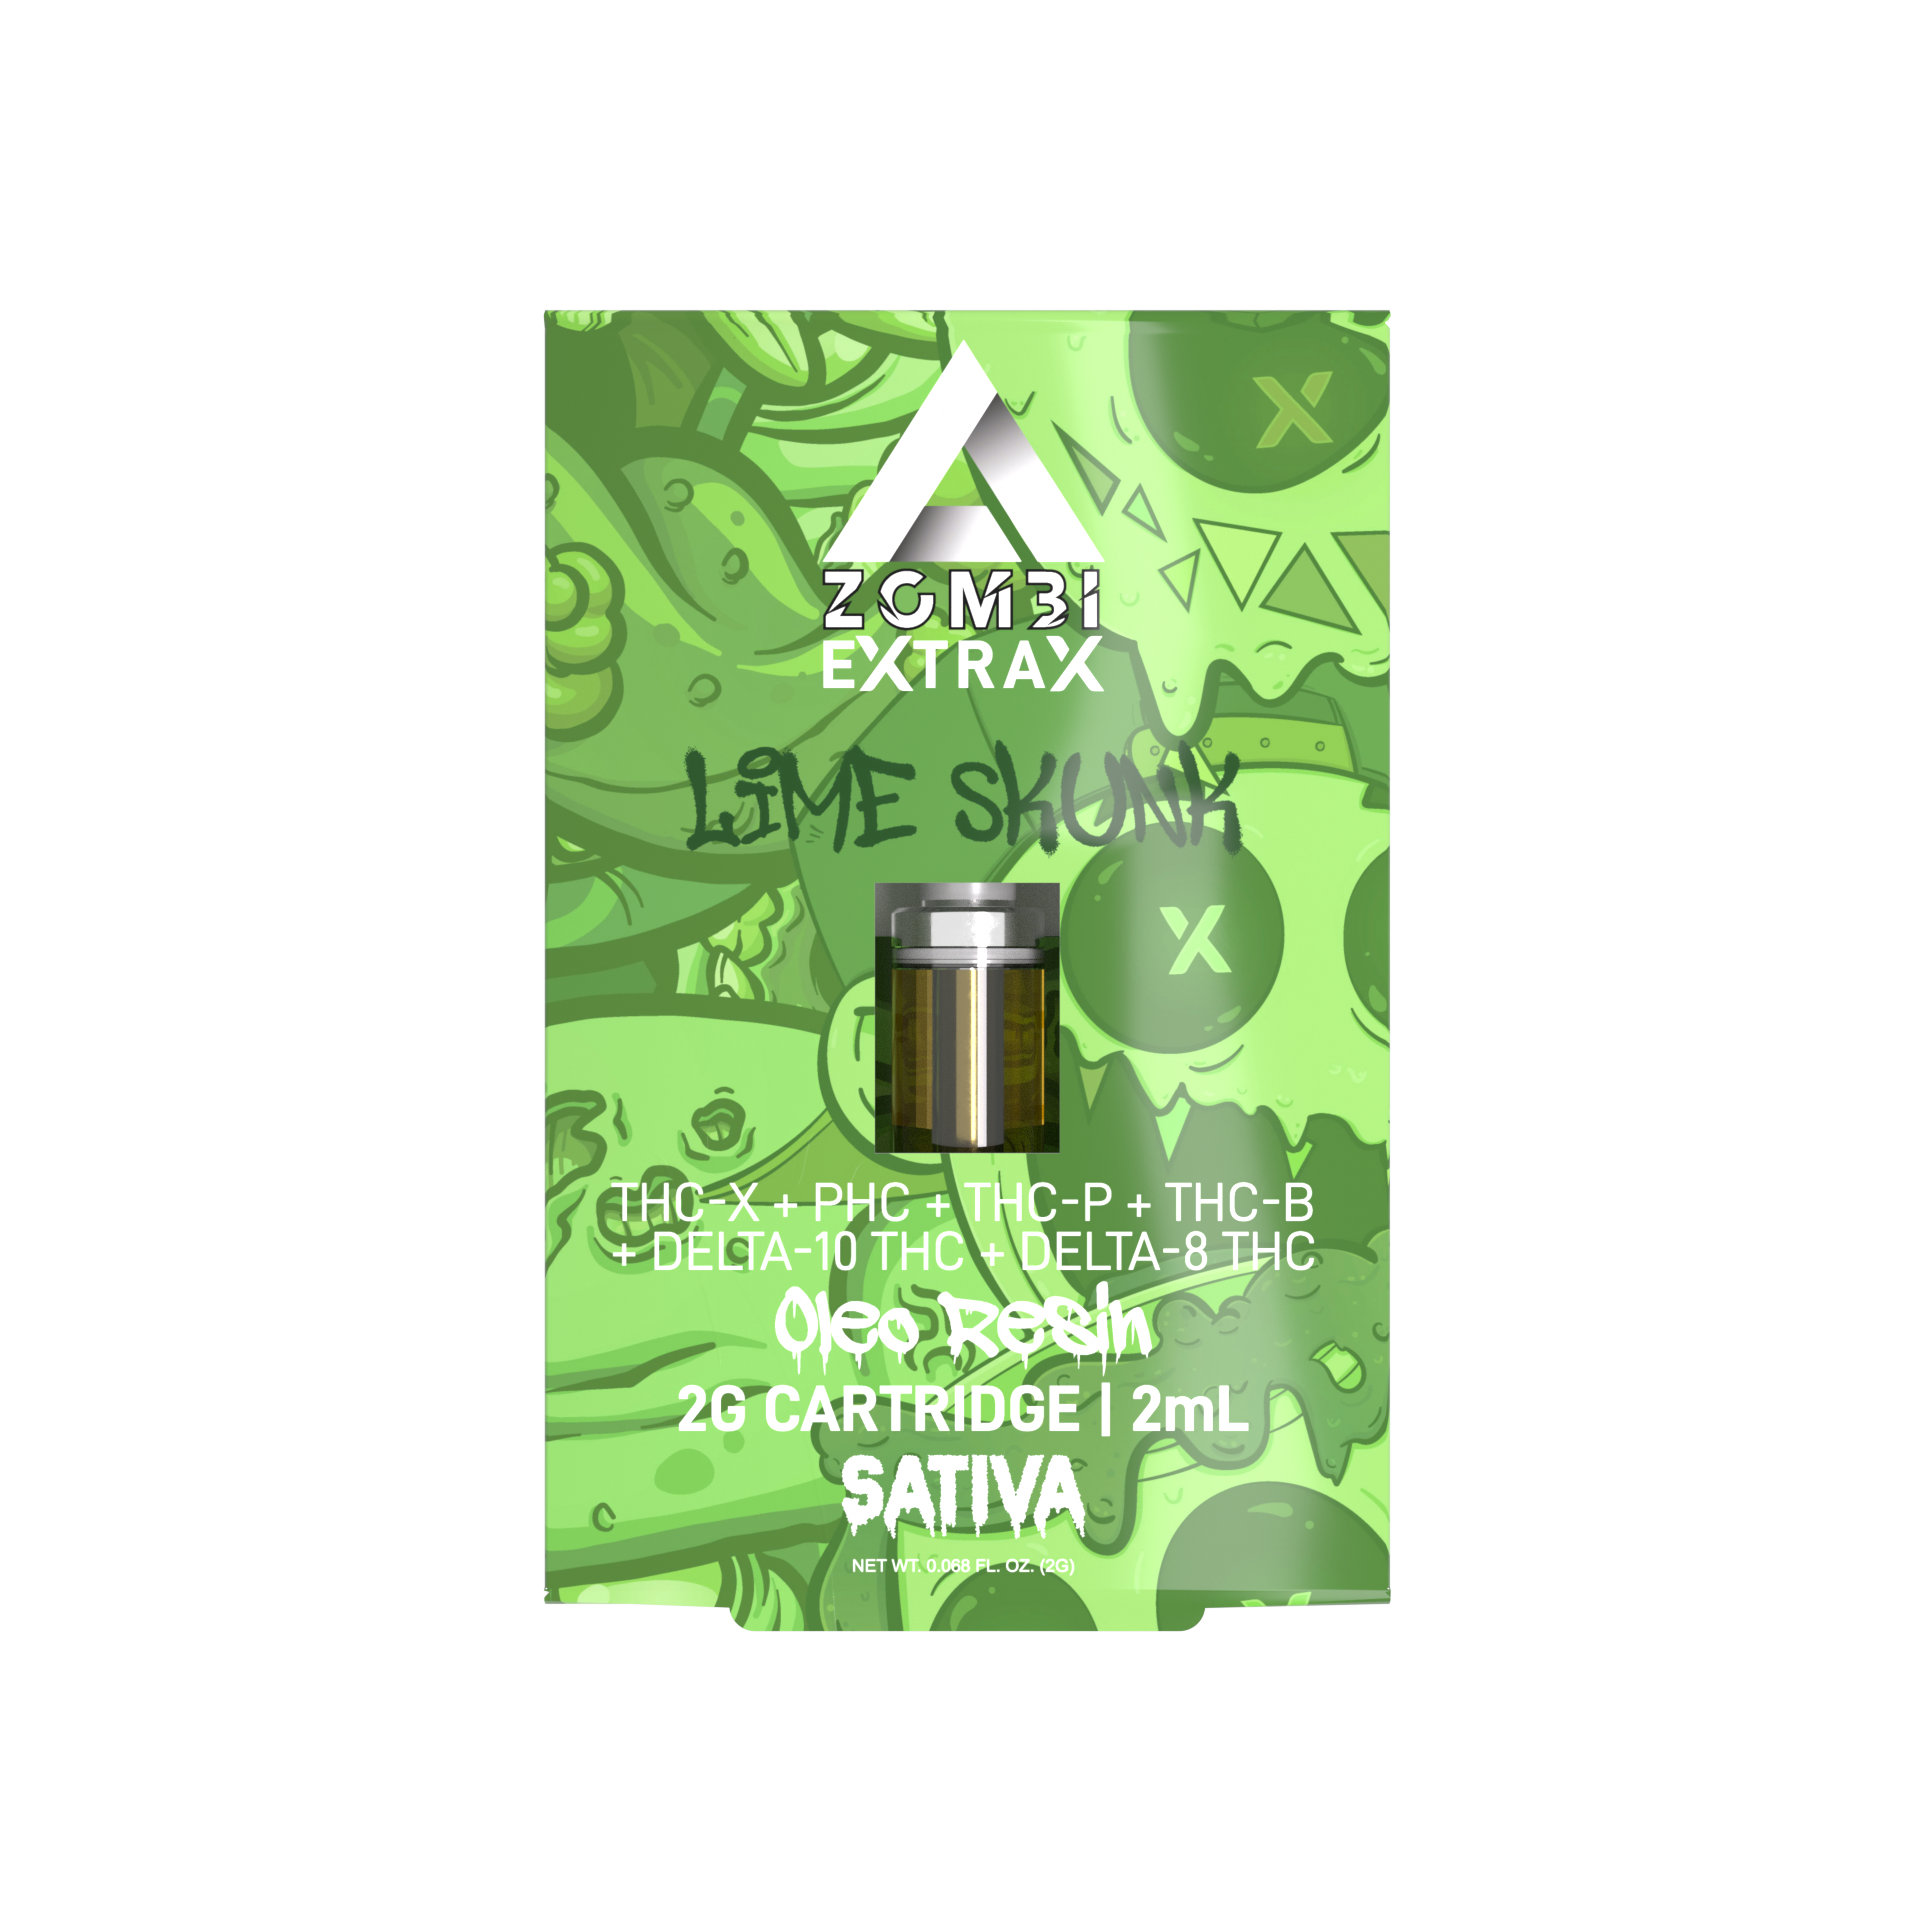 Zombi Extrax Blackout Blend Cartridge 2 Gram